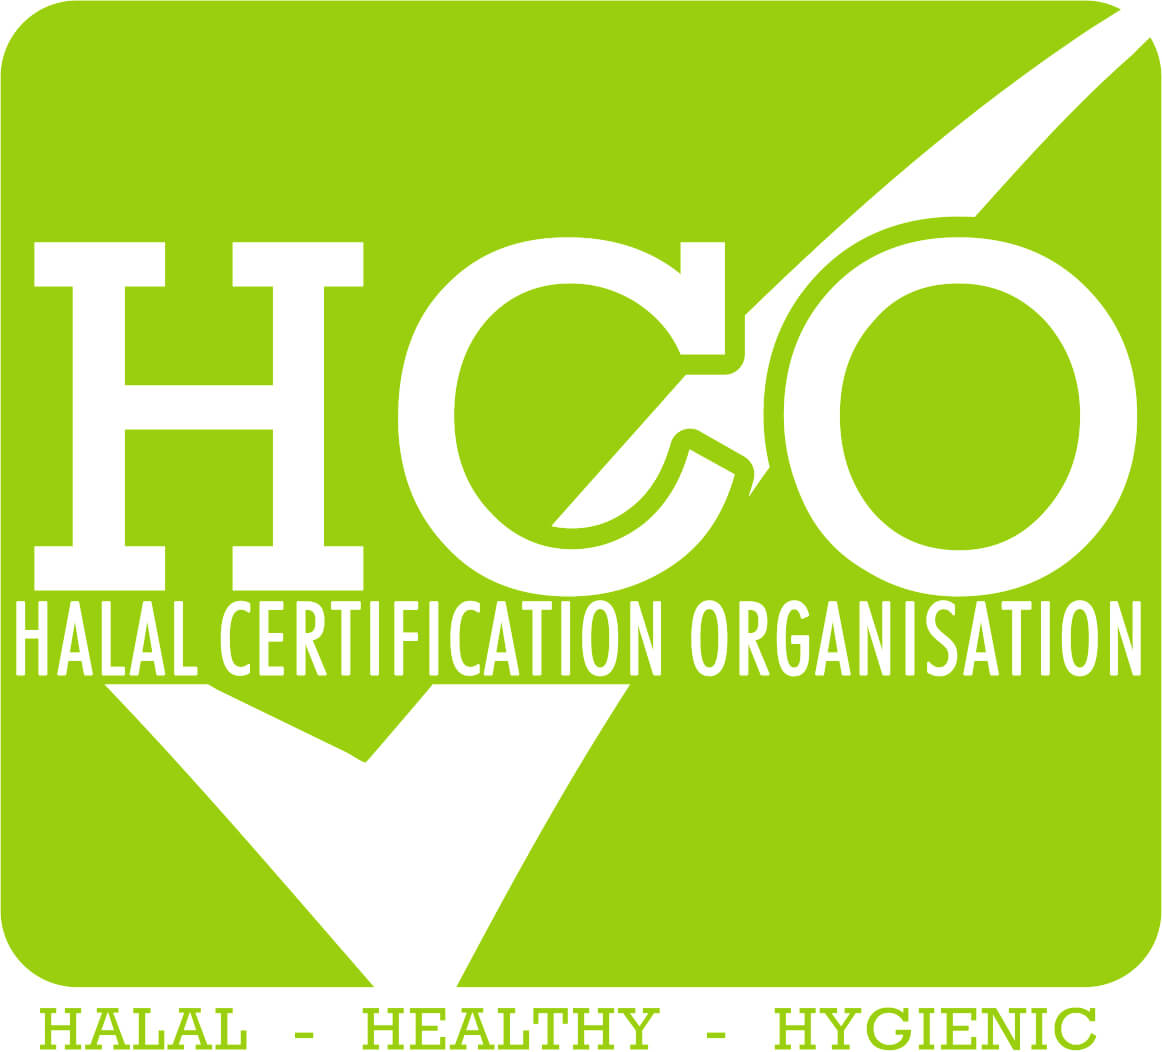 Halal Certification Organisation (HCO)